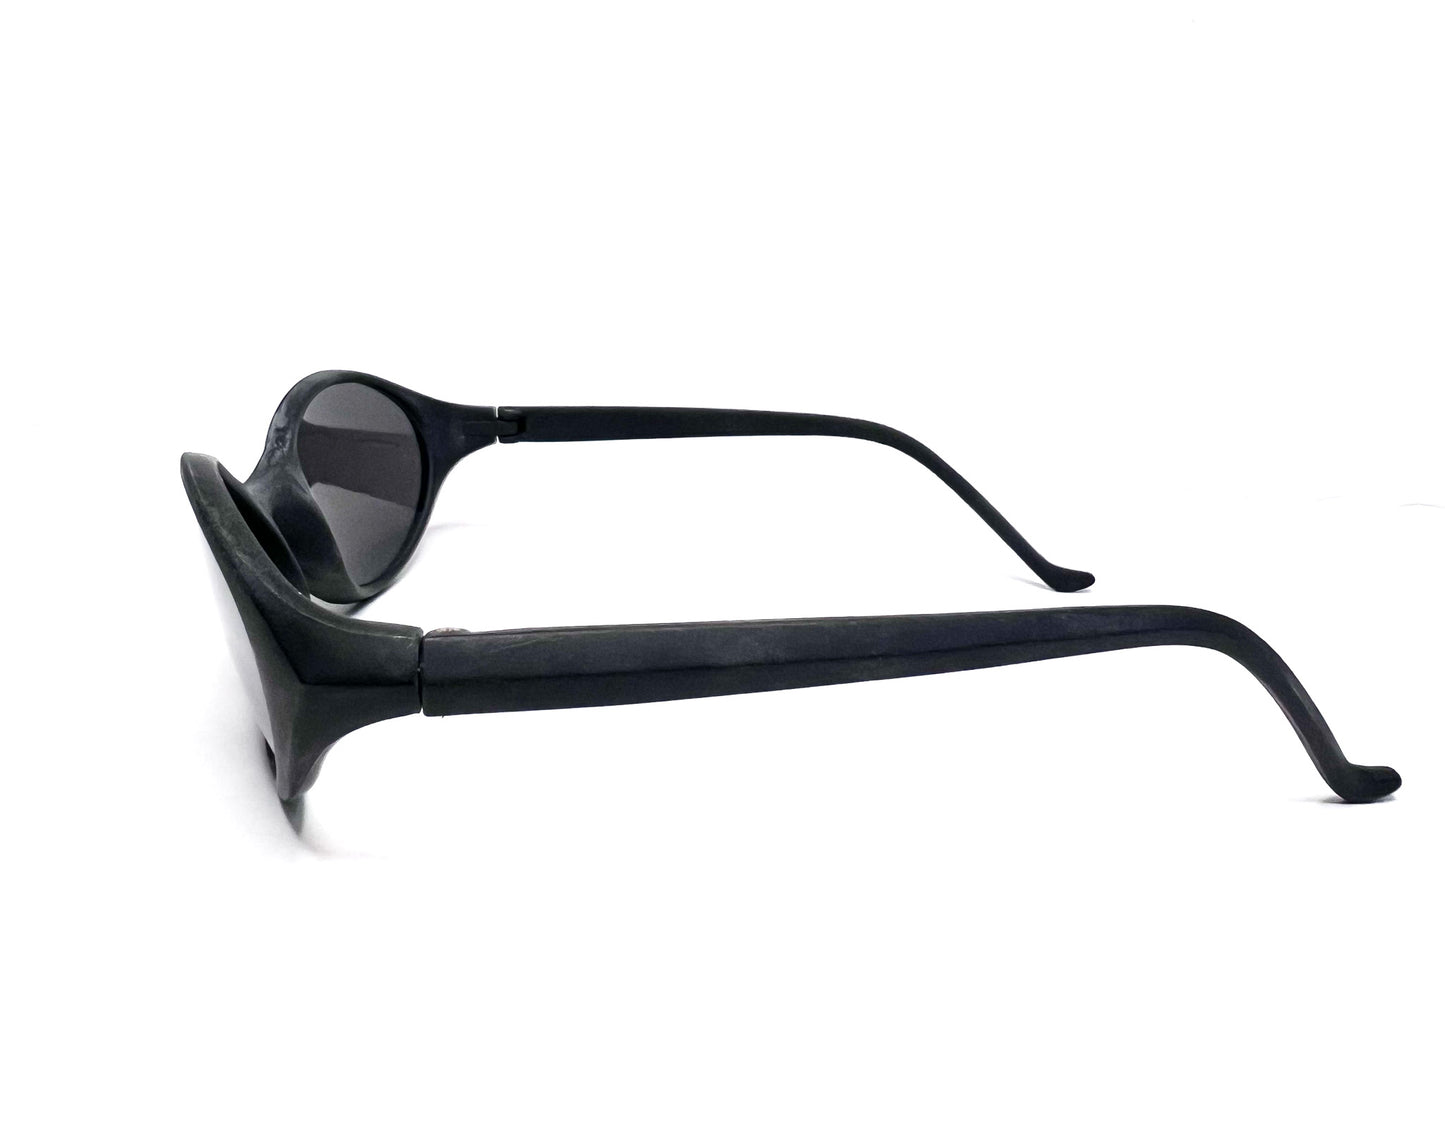 SX Wrapped black racer sunglasses